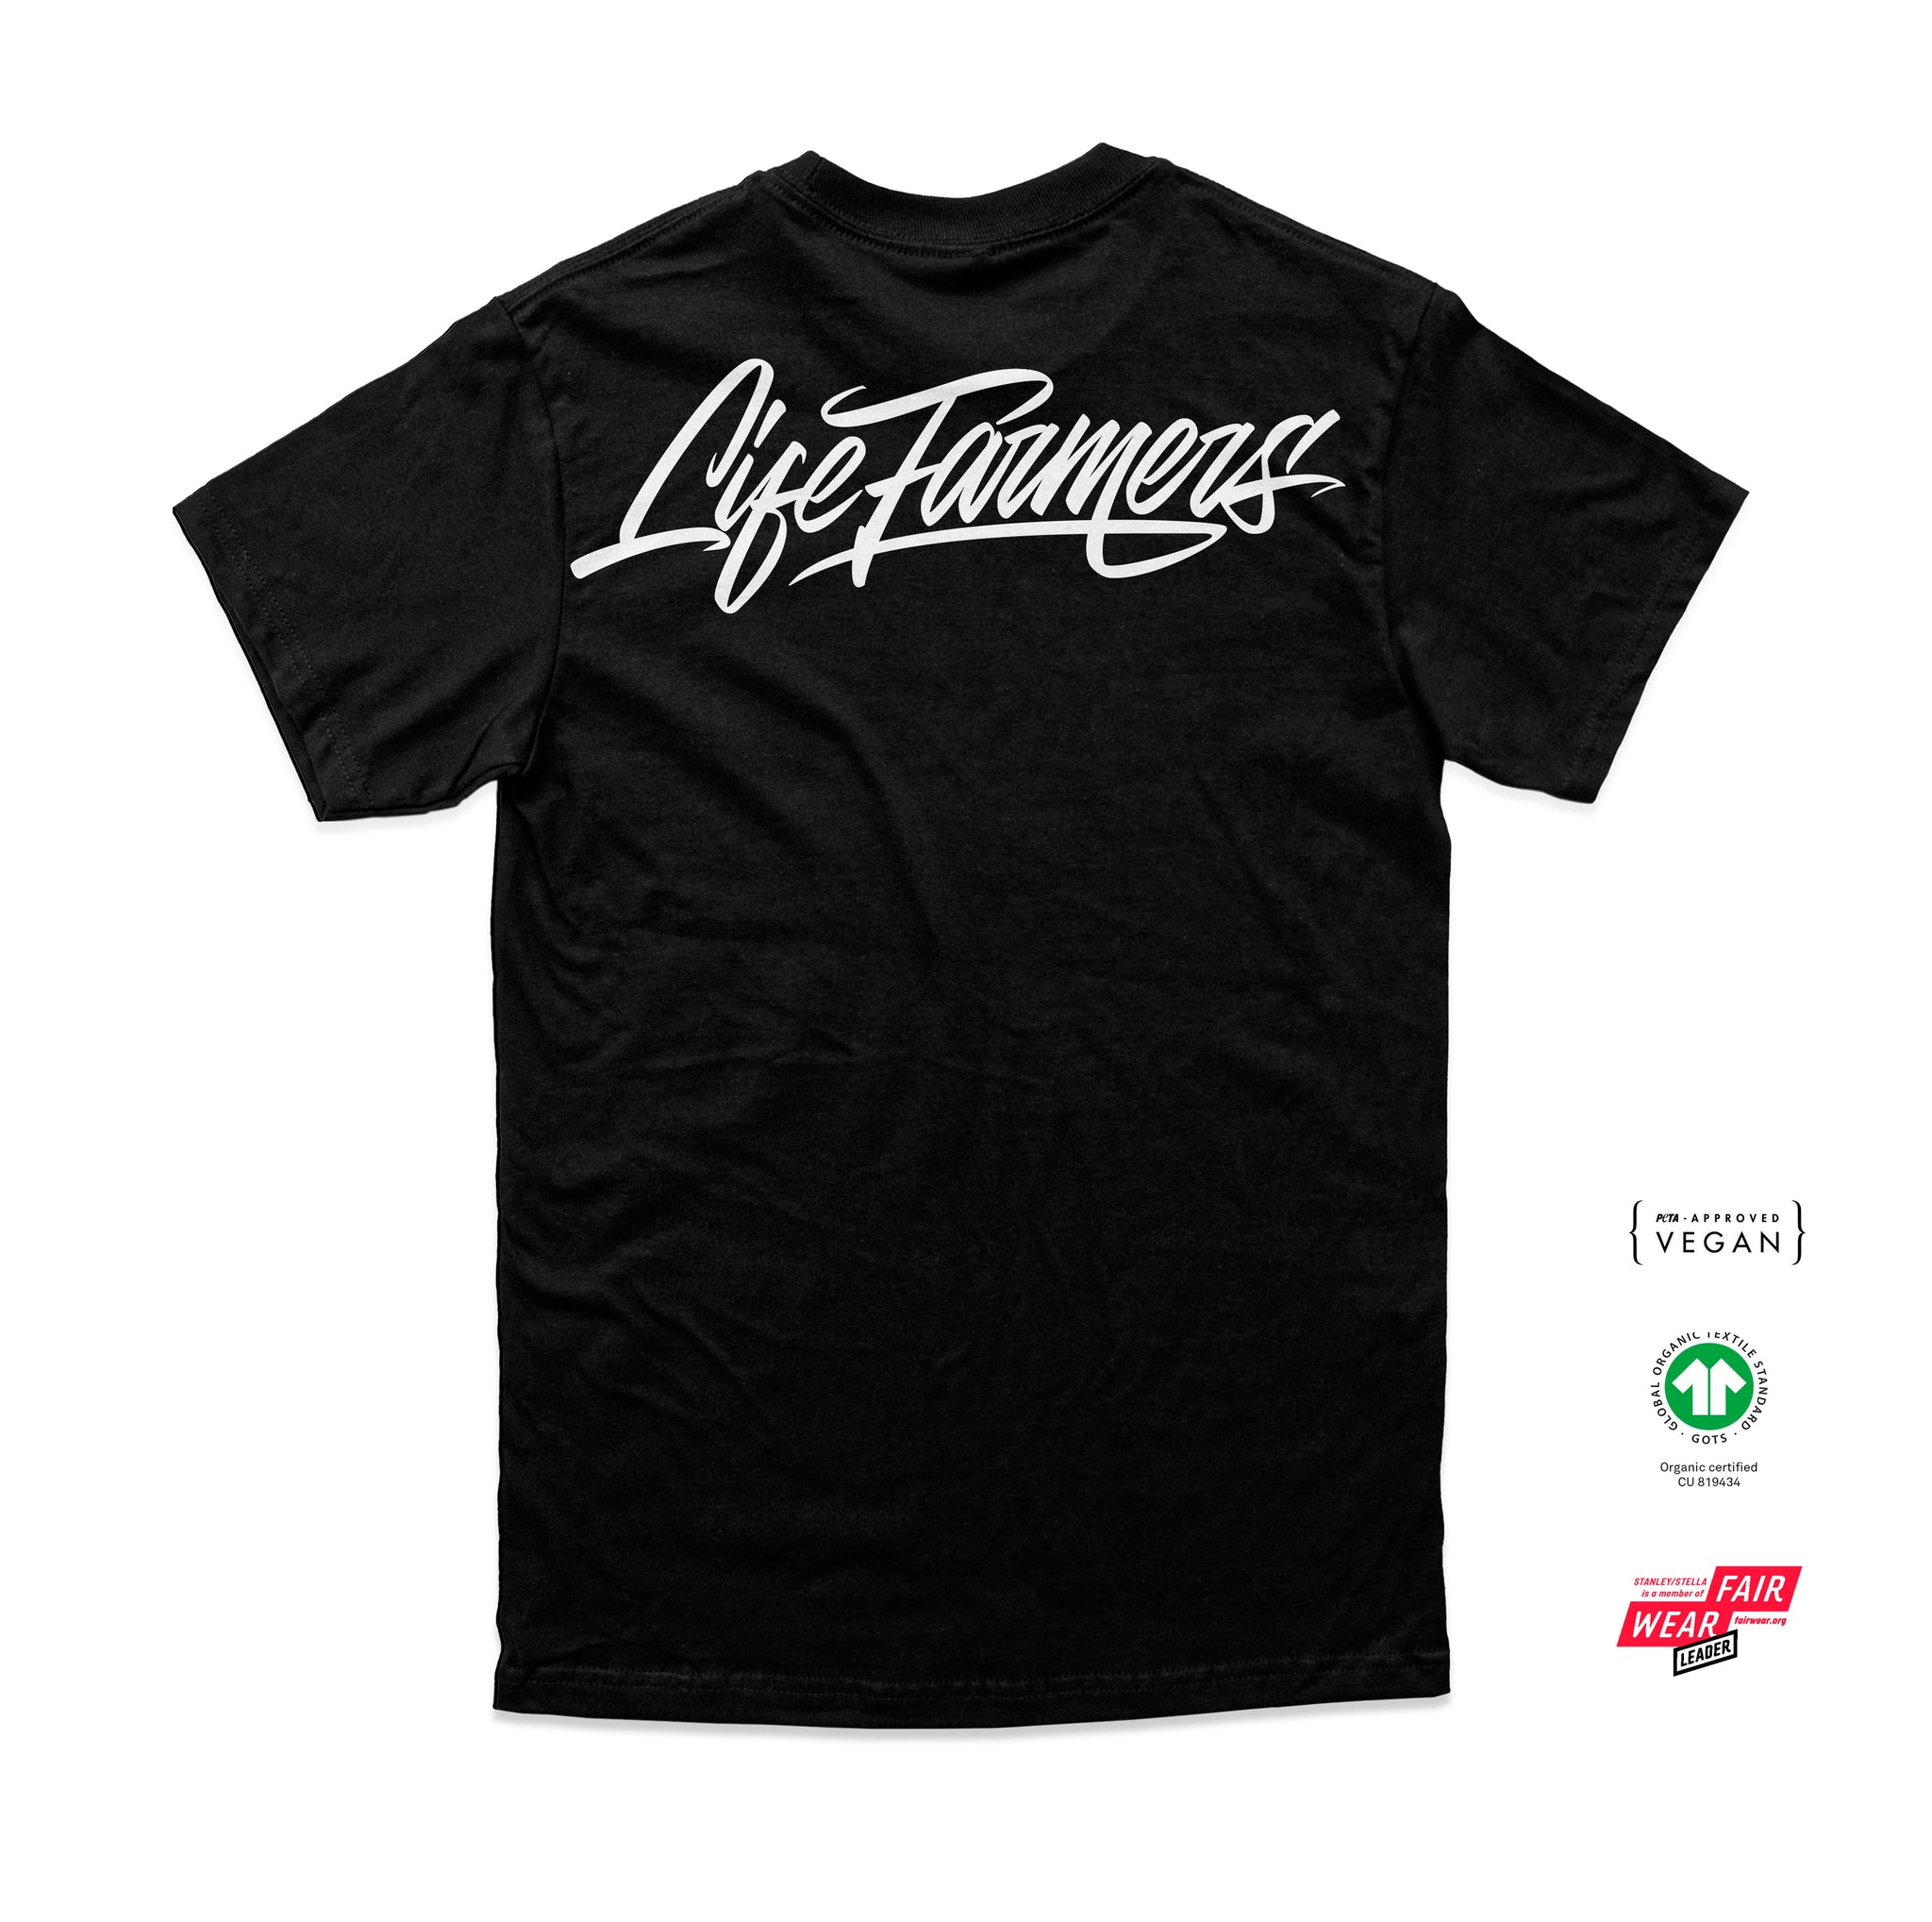 Camiseta Lifefarmers pro black